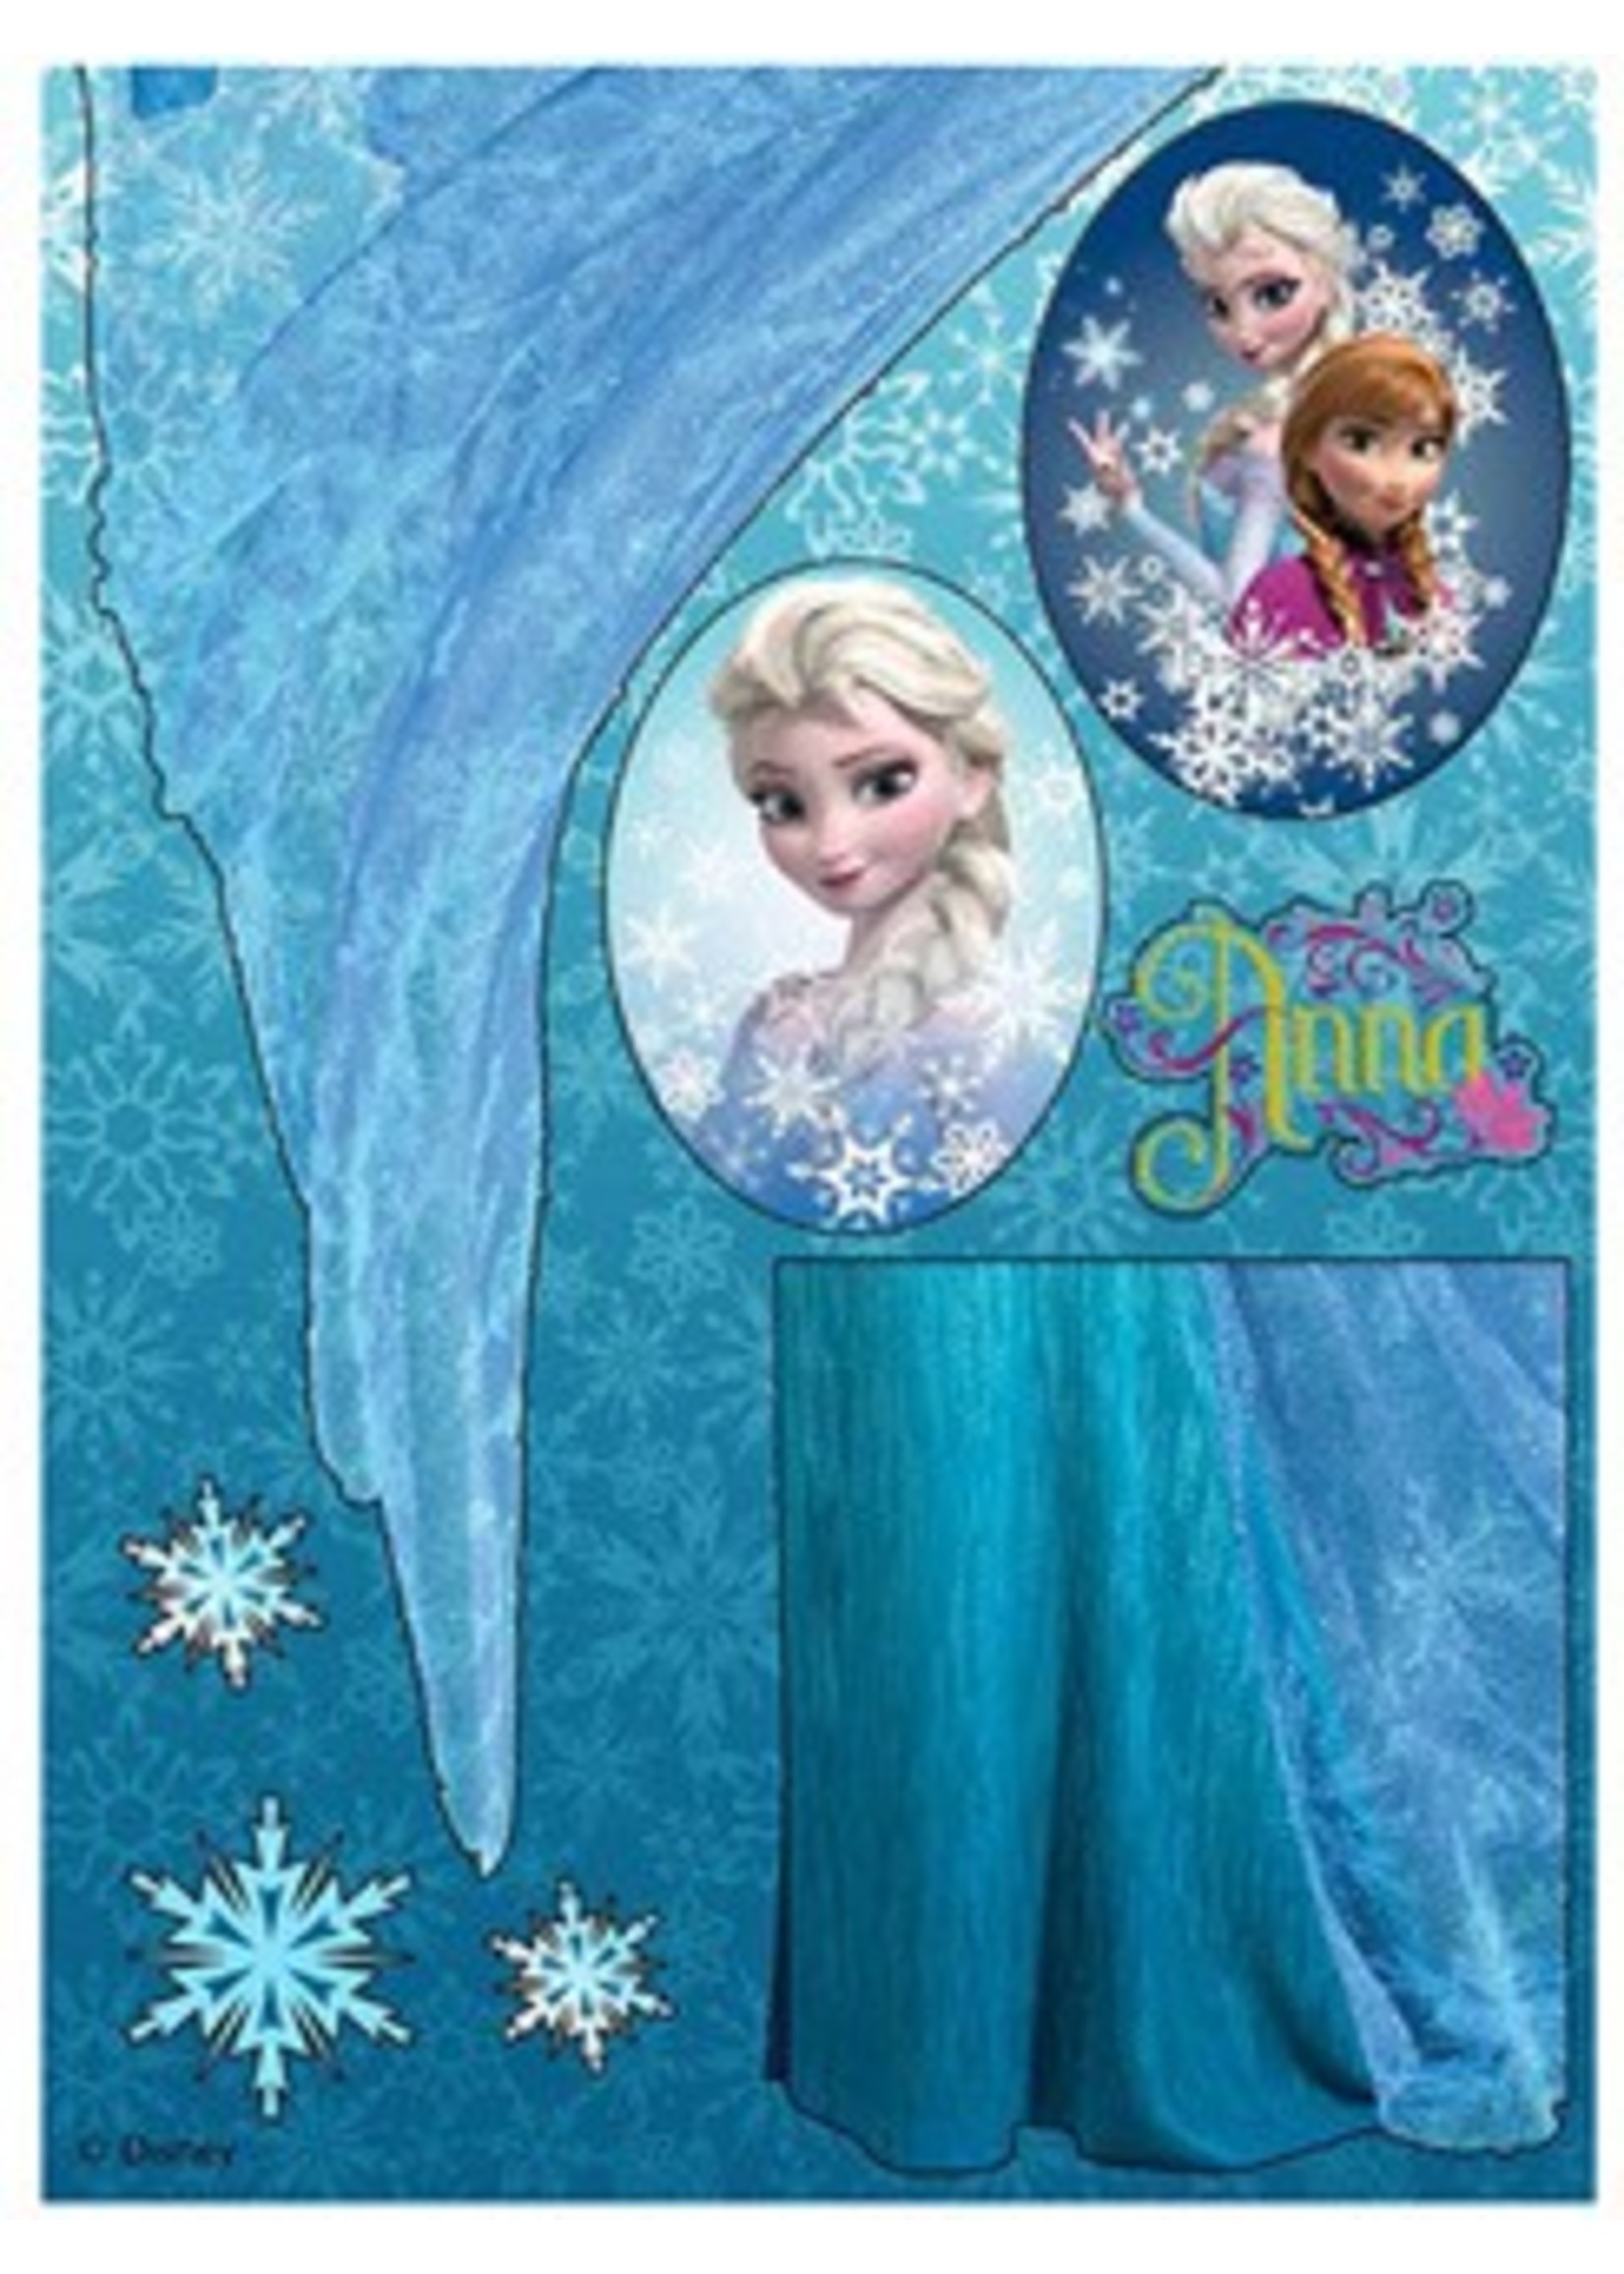 Frozen Stickers Elsa 8033675317755